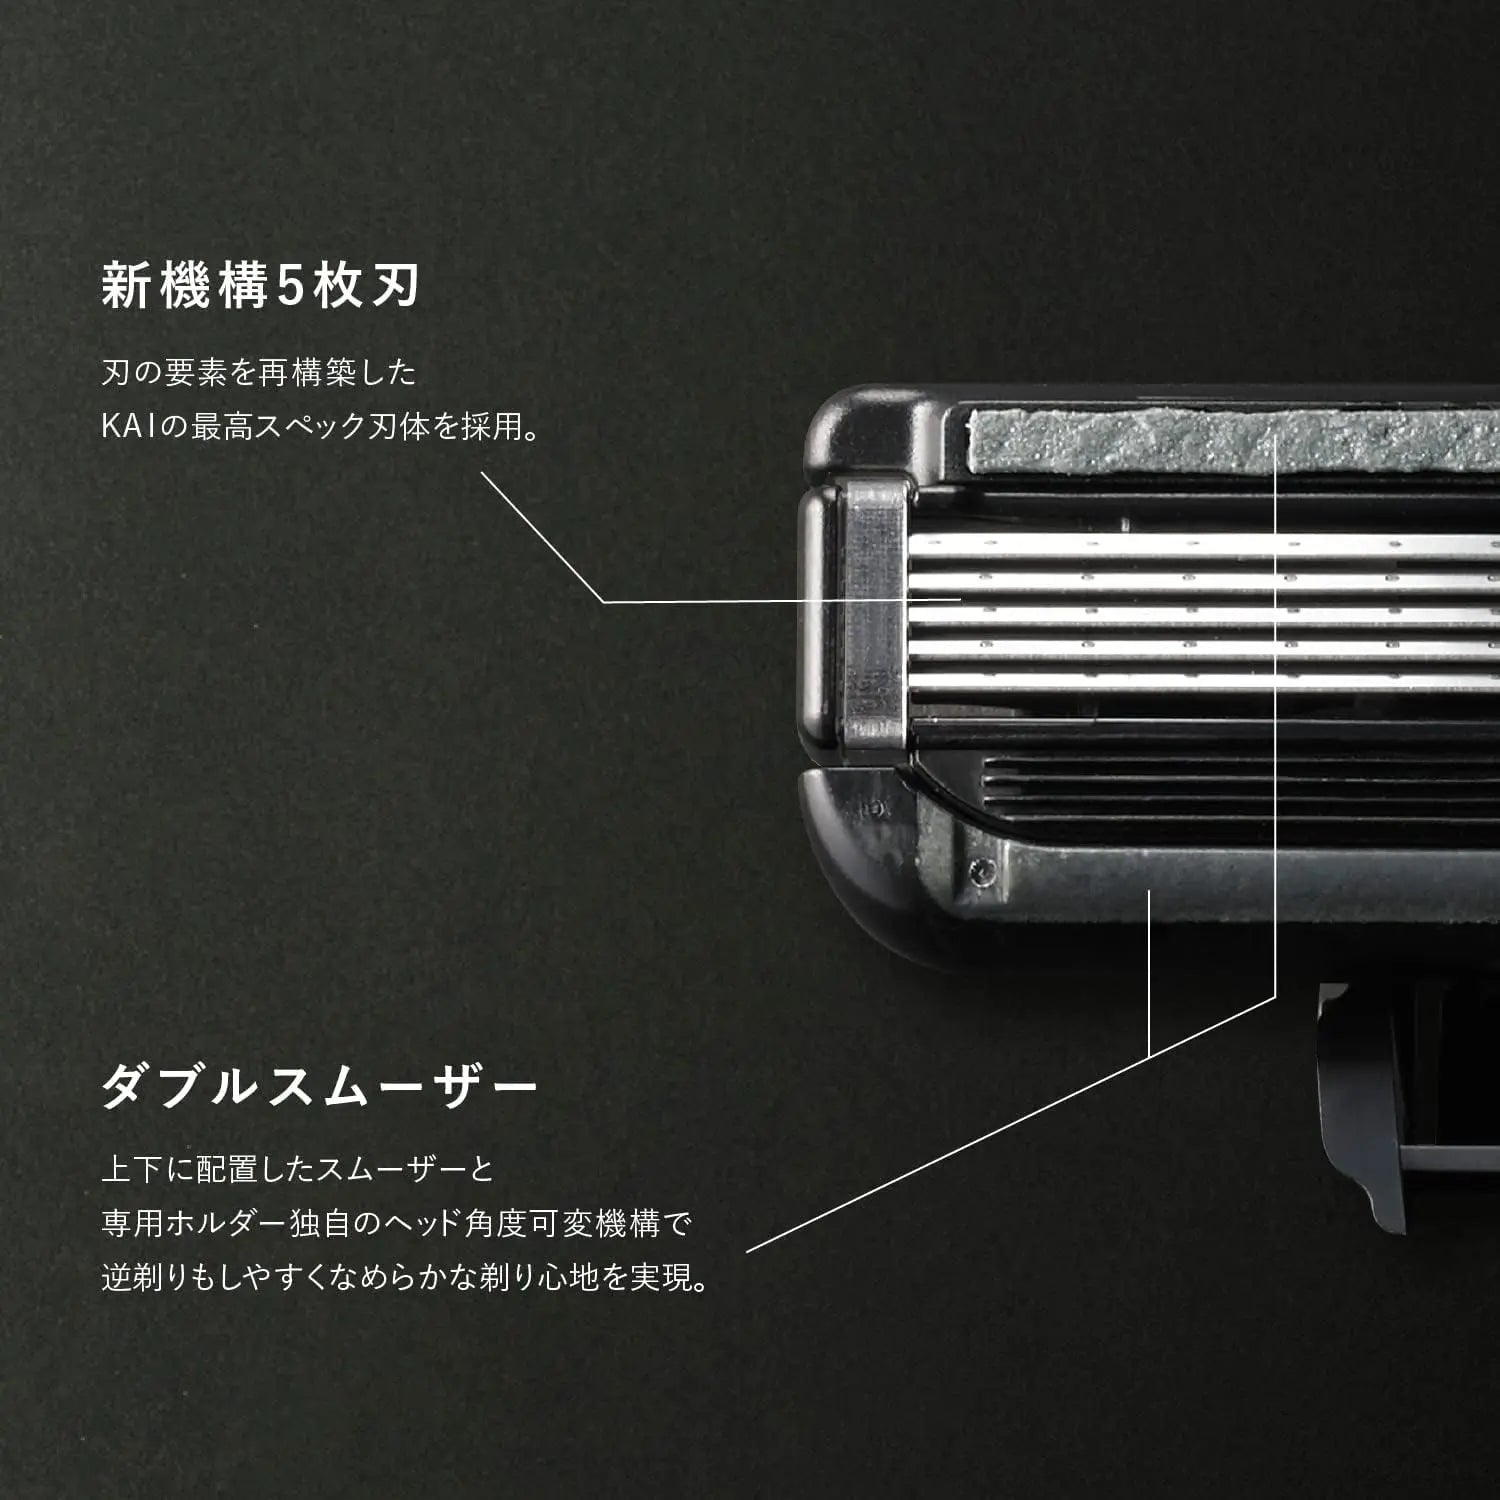 KAI Auger 5-Blade Razor Pack (Main Unit + 6 Replacement Blades) - Buy Me Japan